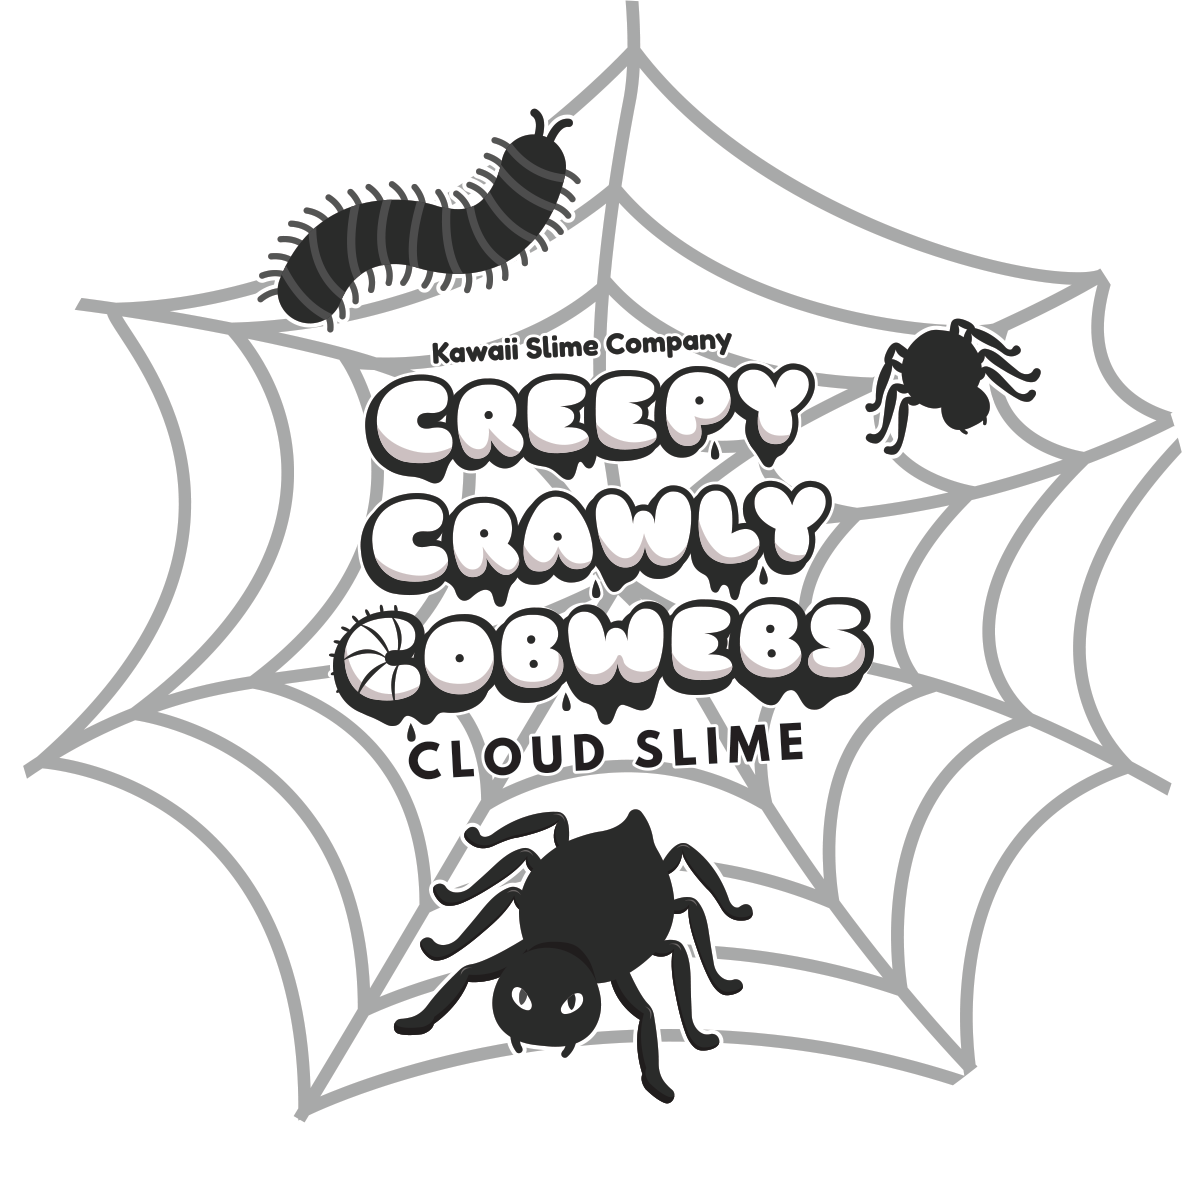 Creepy Crawly Cobwebs Cloud Slime